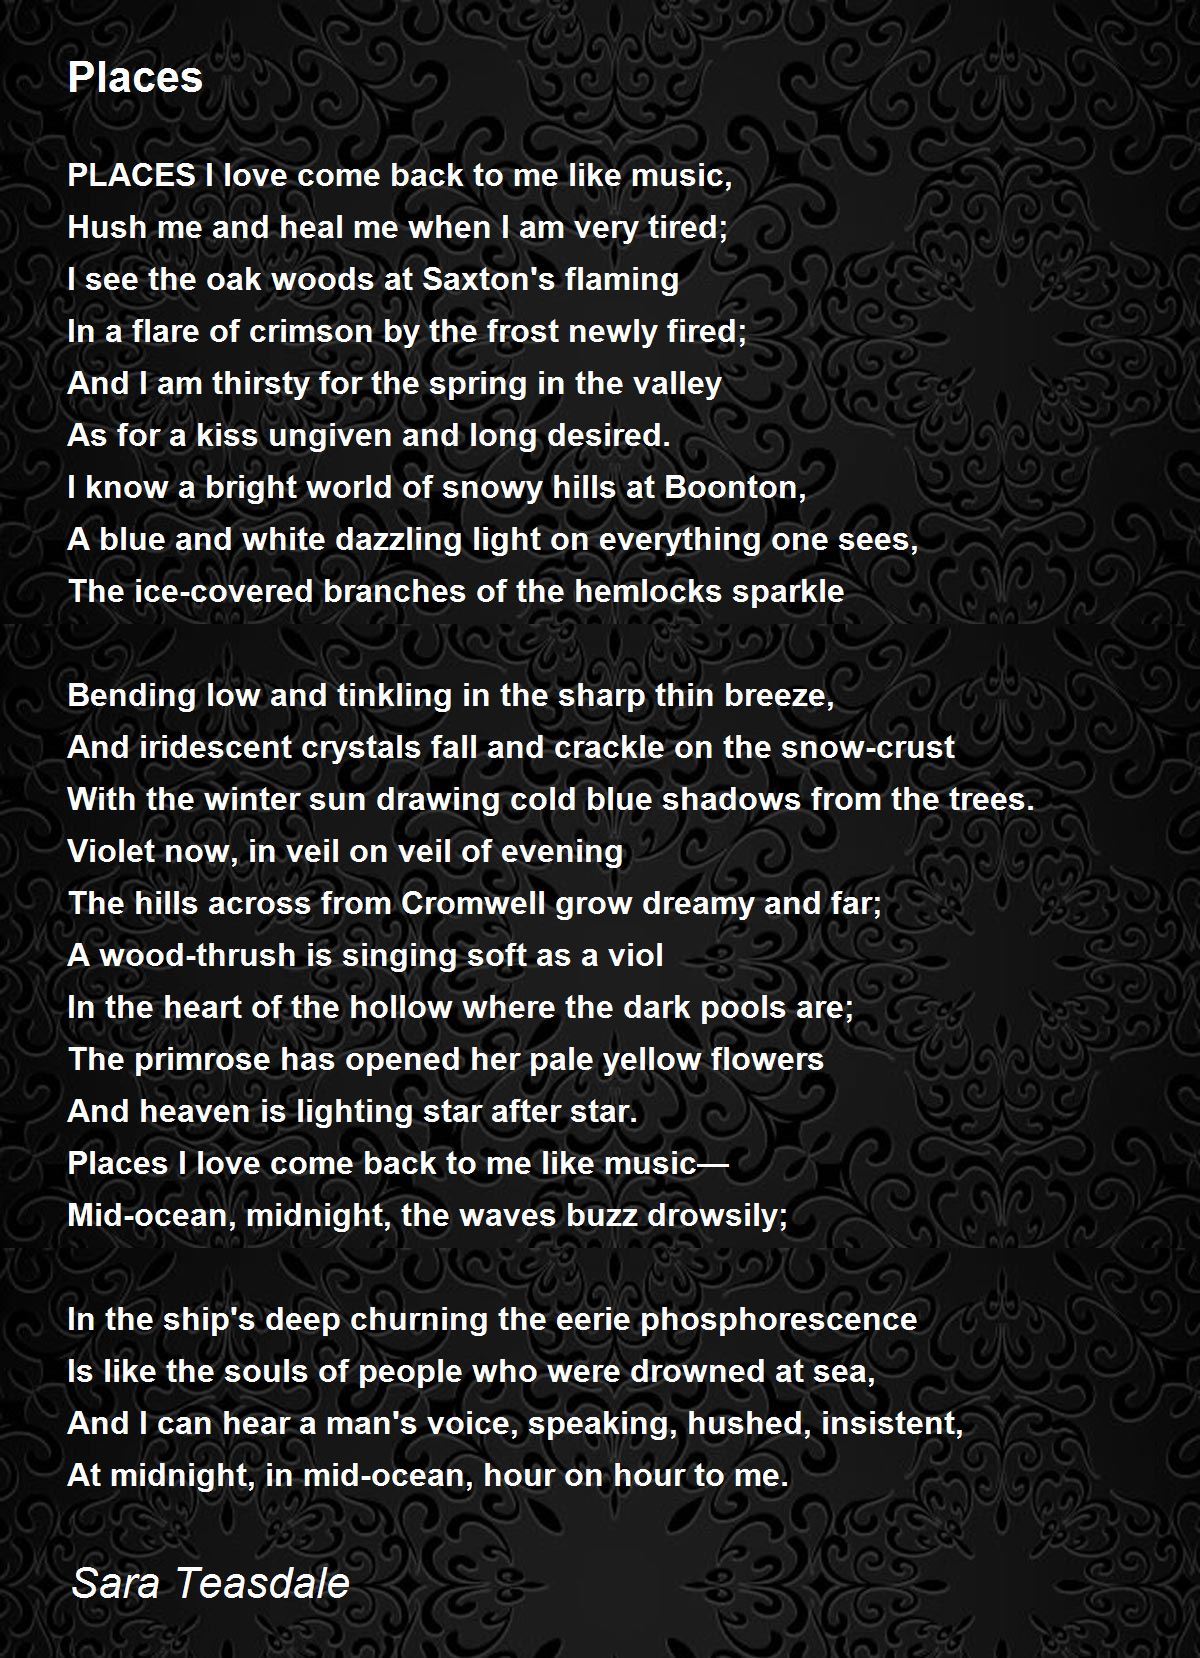 Places Poem by Sara Teasdale - Poem Hunter